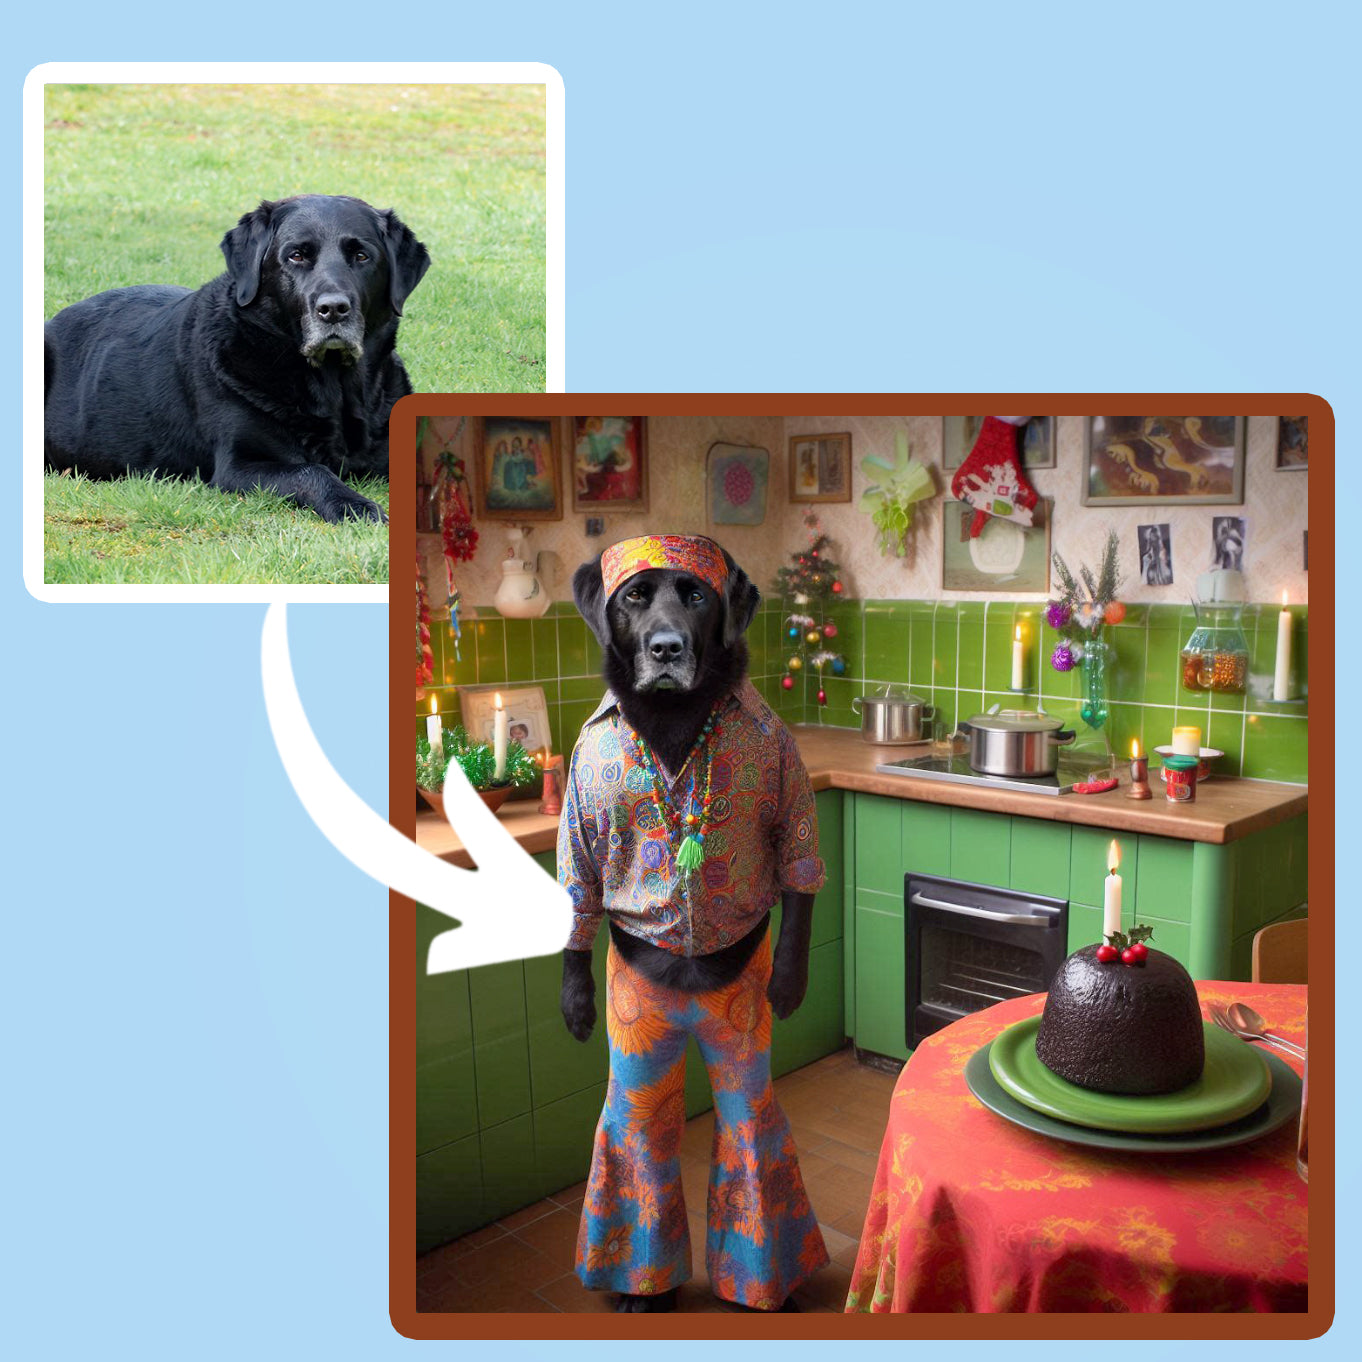 A reto pet portrait 1960s black dog standing like a human in a Christmas kitchen scene